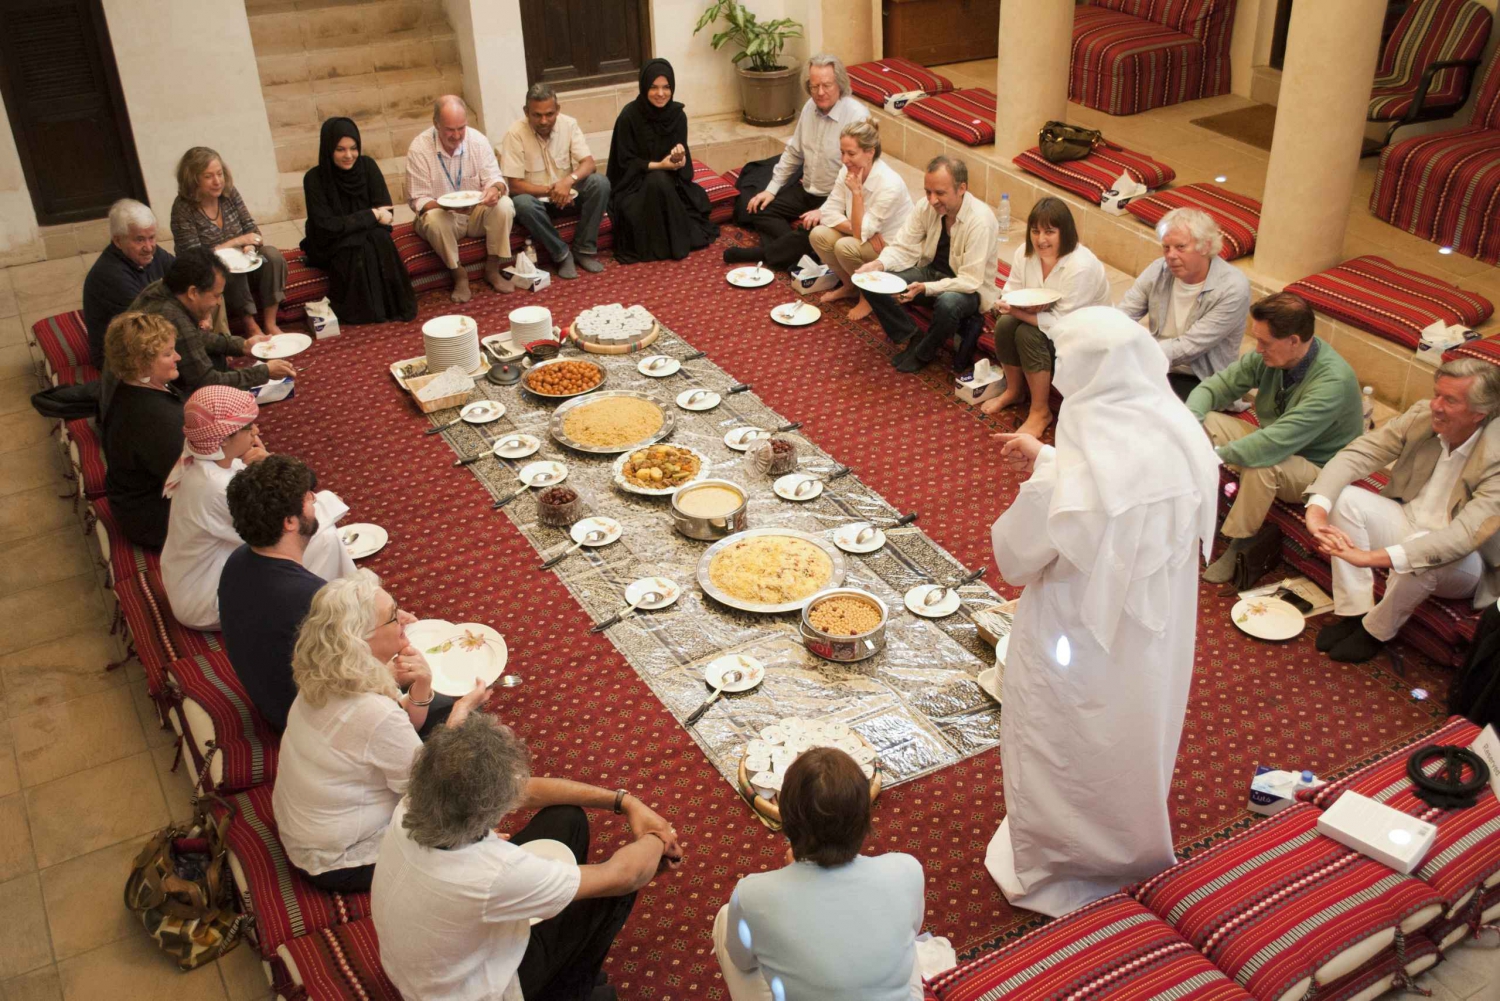 Dubai: Dinner at Sheikh Mohammed Cultural Center